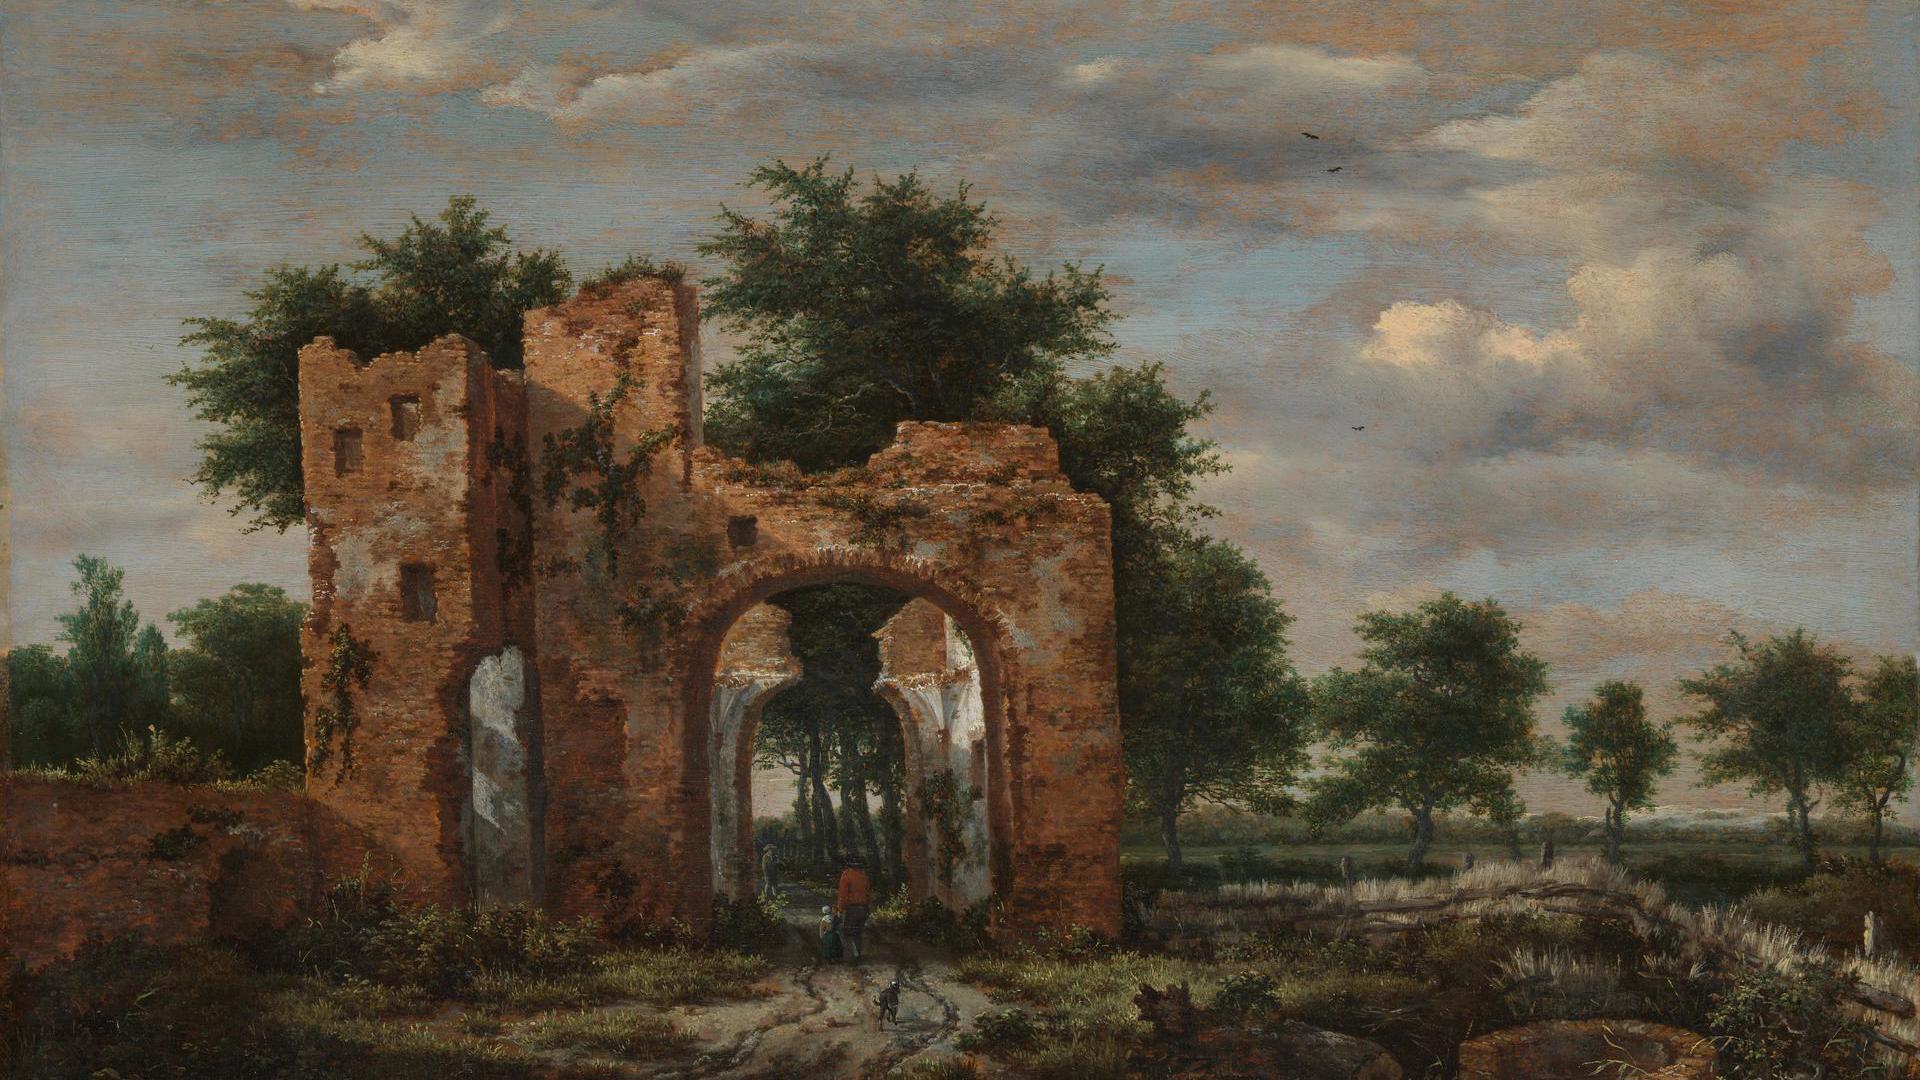 A Ruined Castle Gateway by Jacob van Ruisdael